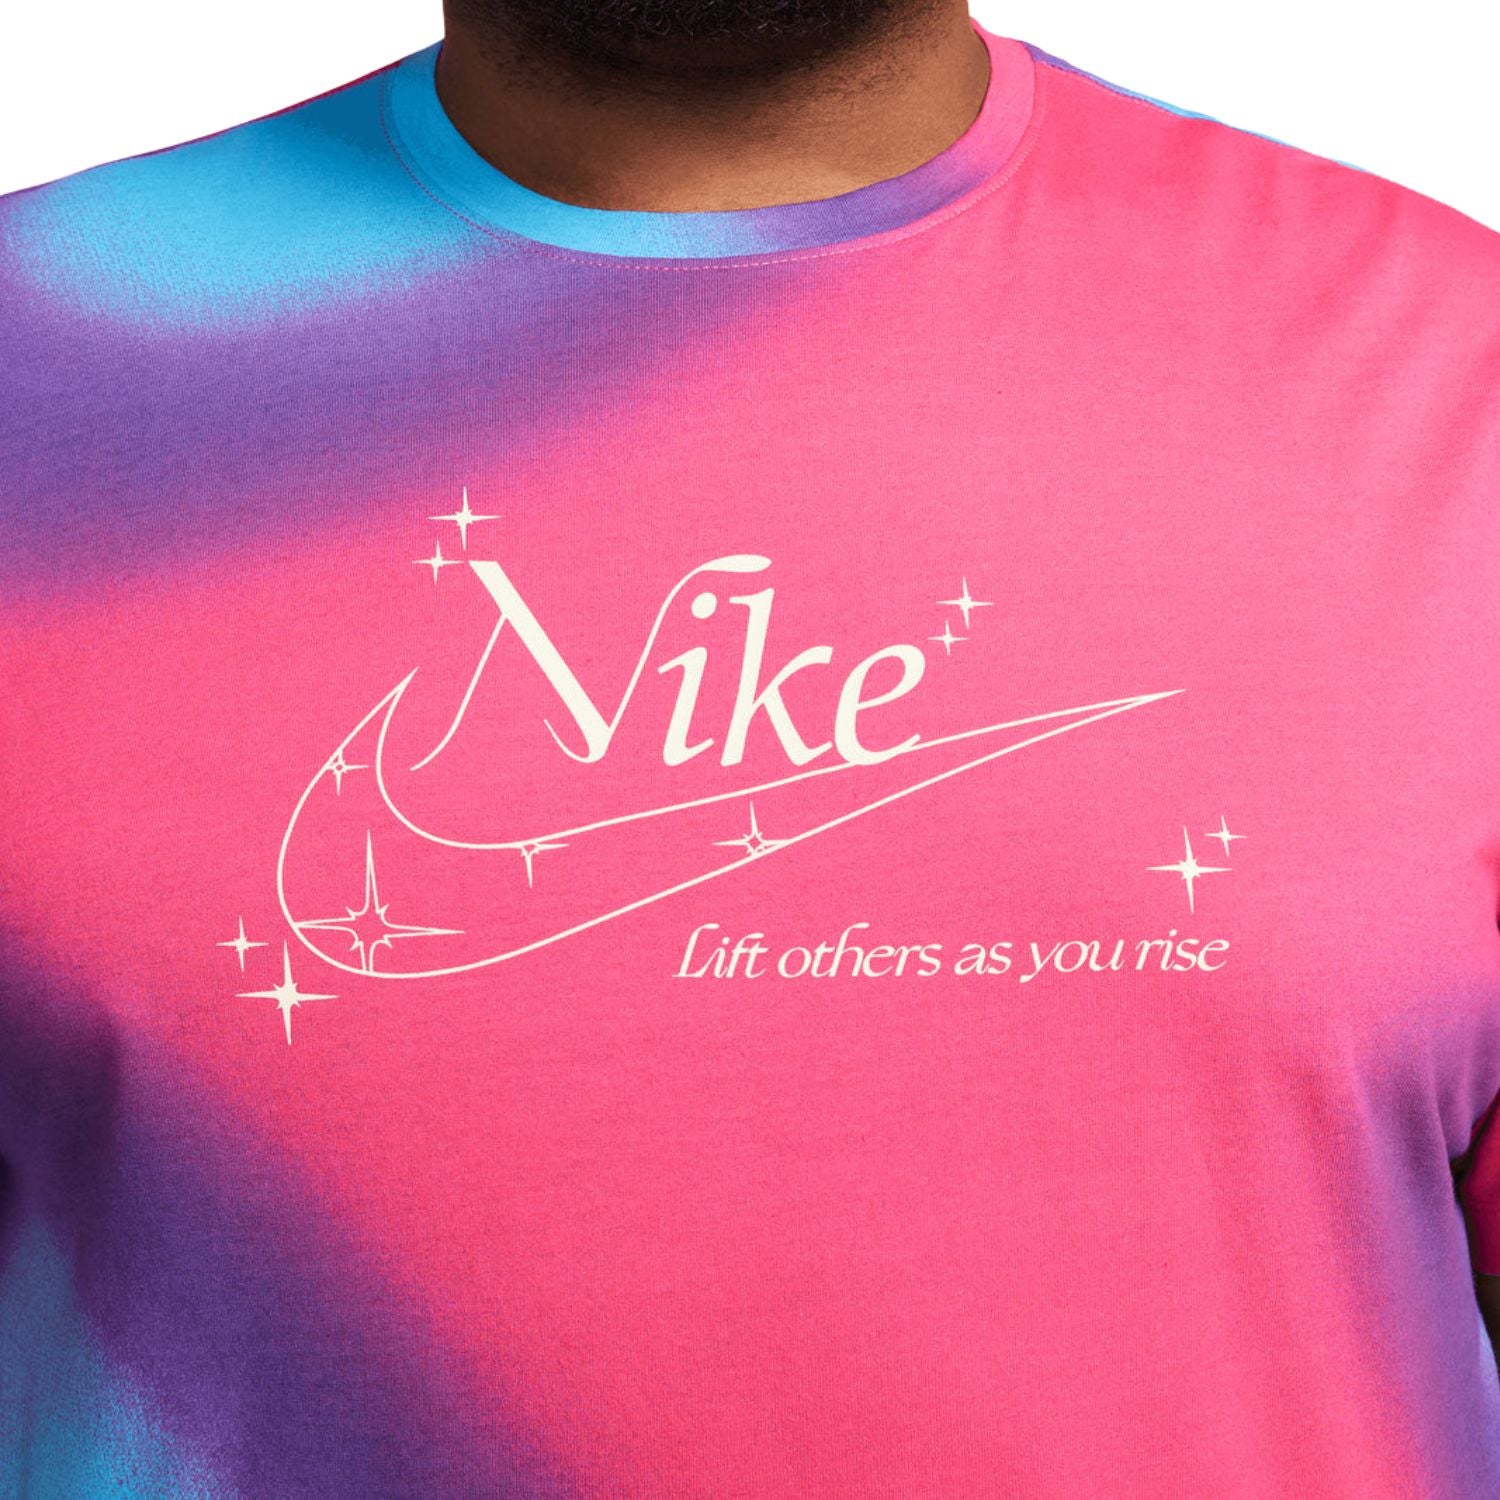 Nike Sportswear T-shirt Mens Style : Dz2823